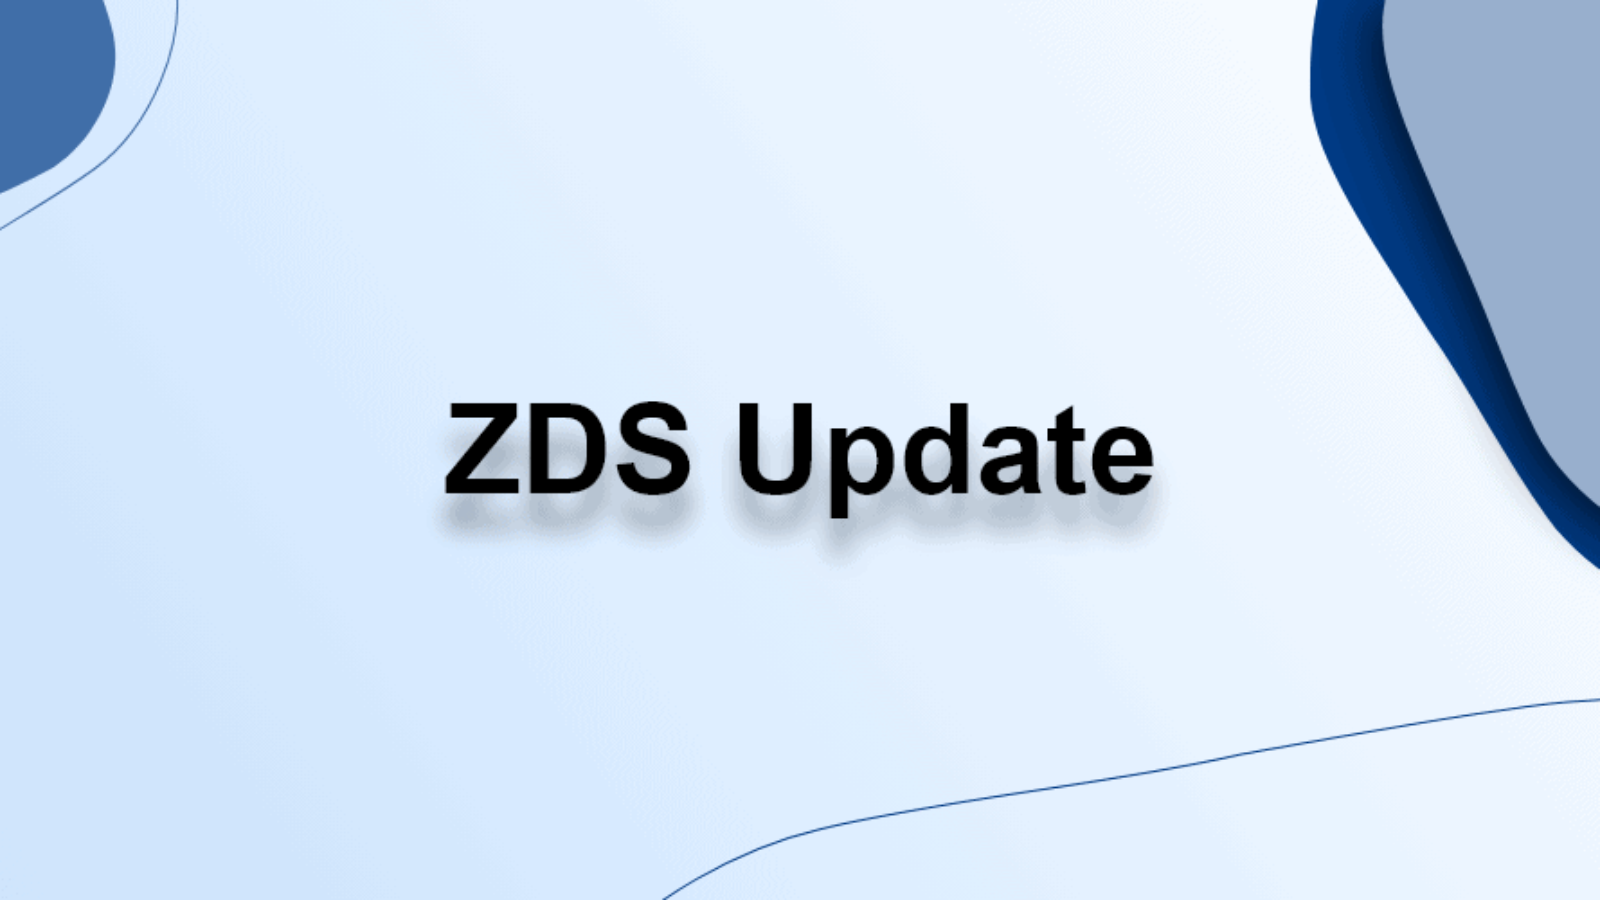 ZDS-Services - Blog - ZDS Update